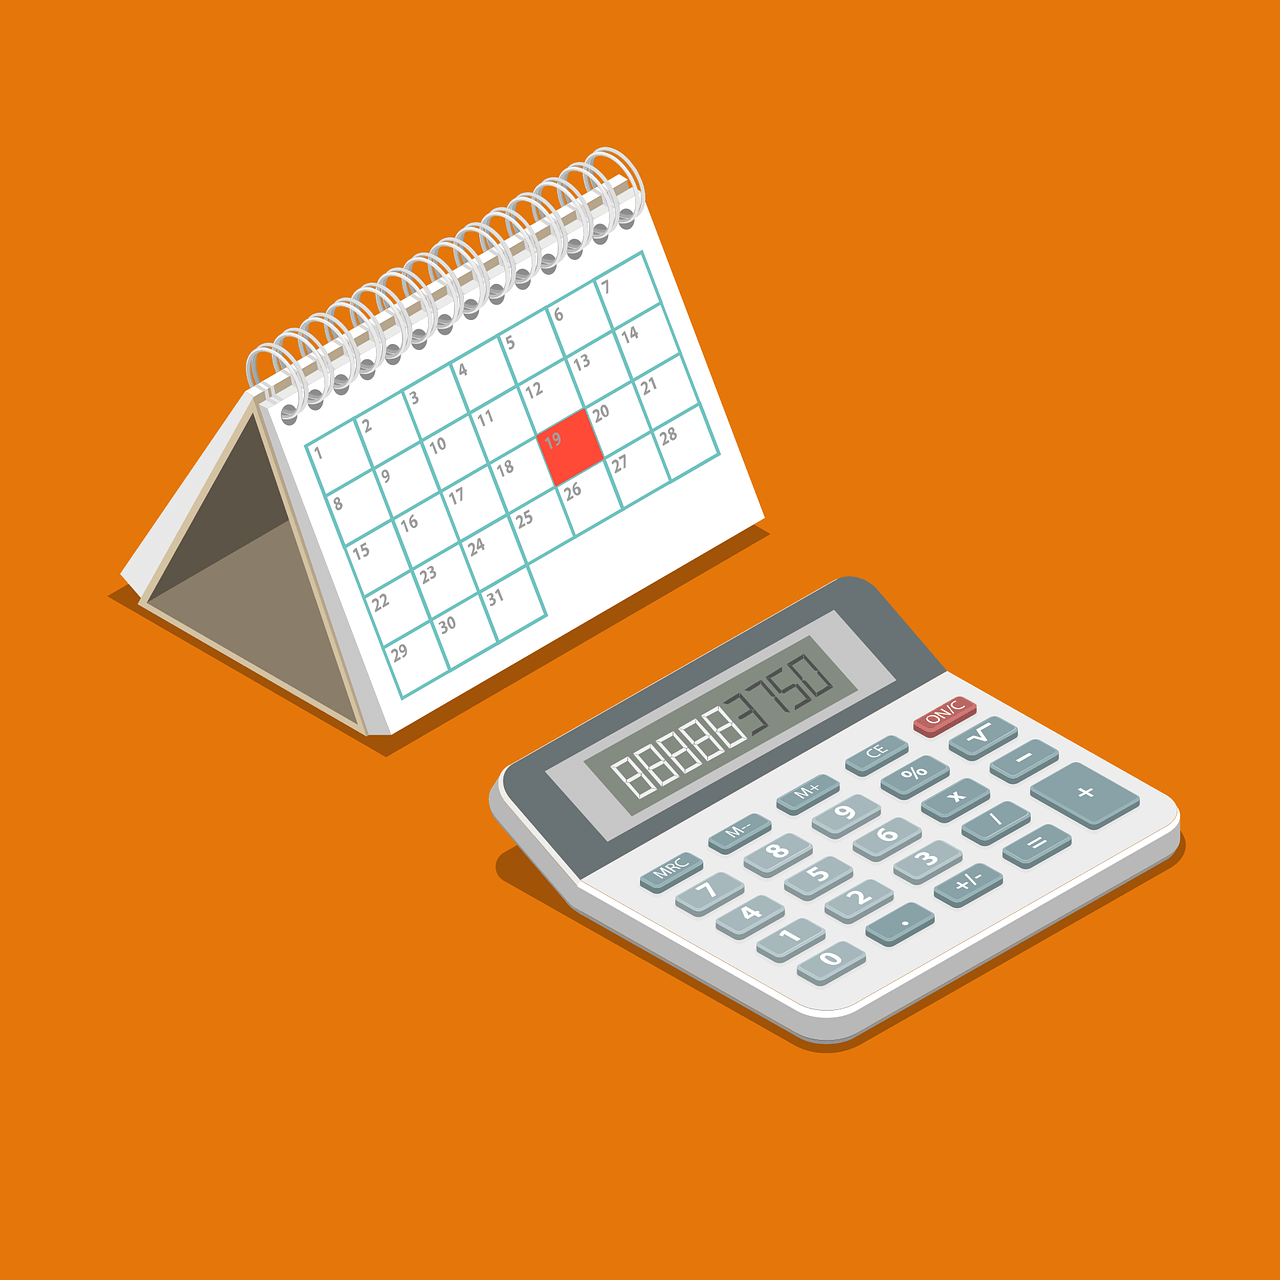 A calendar and calculator on an orange background